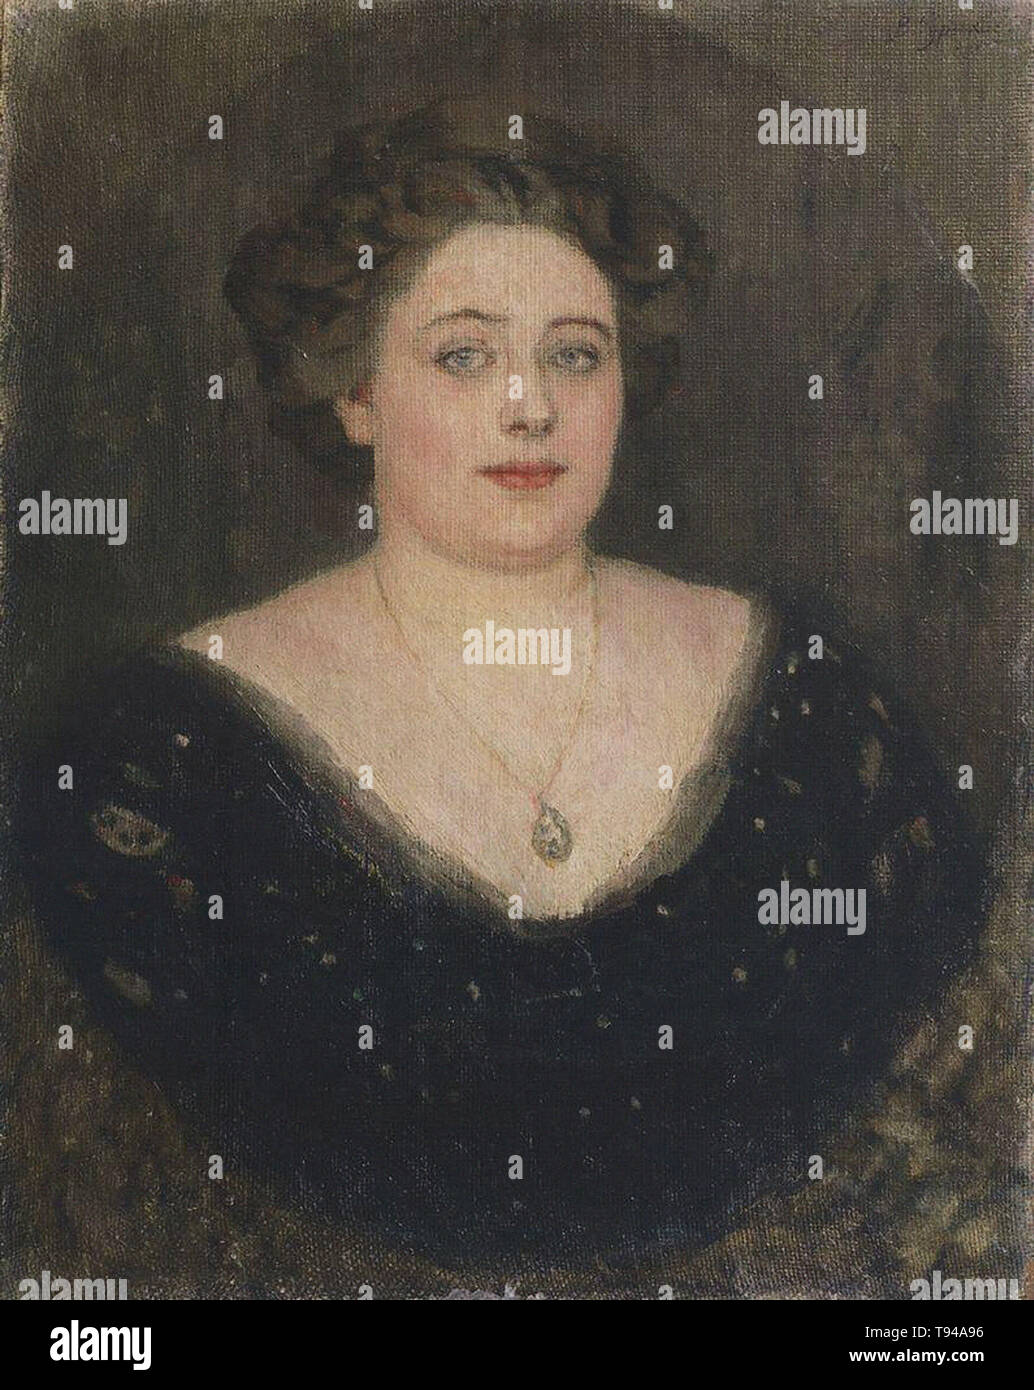 Vasily Surikov - portrait m velichkin nee baroness von klodt yurgensburg 1914 Stock Photo